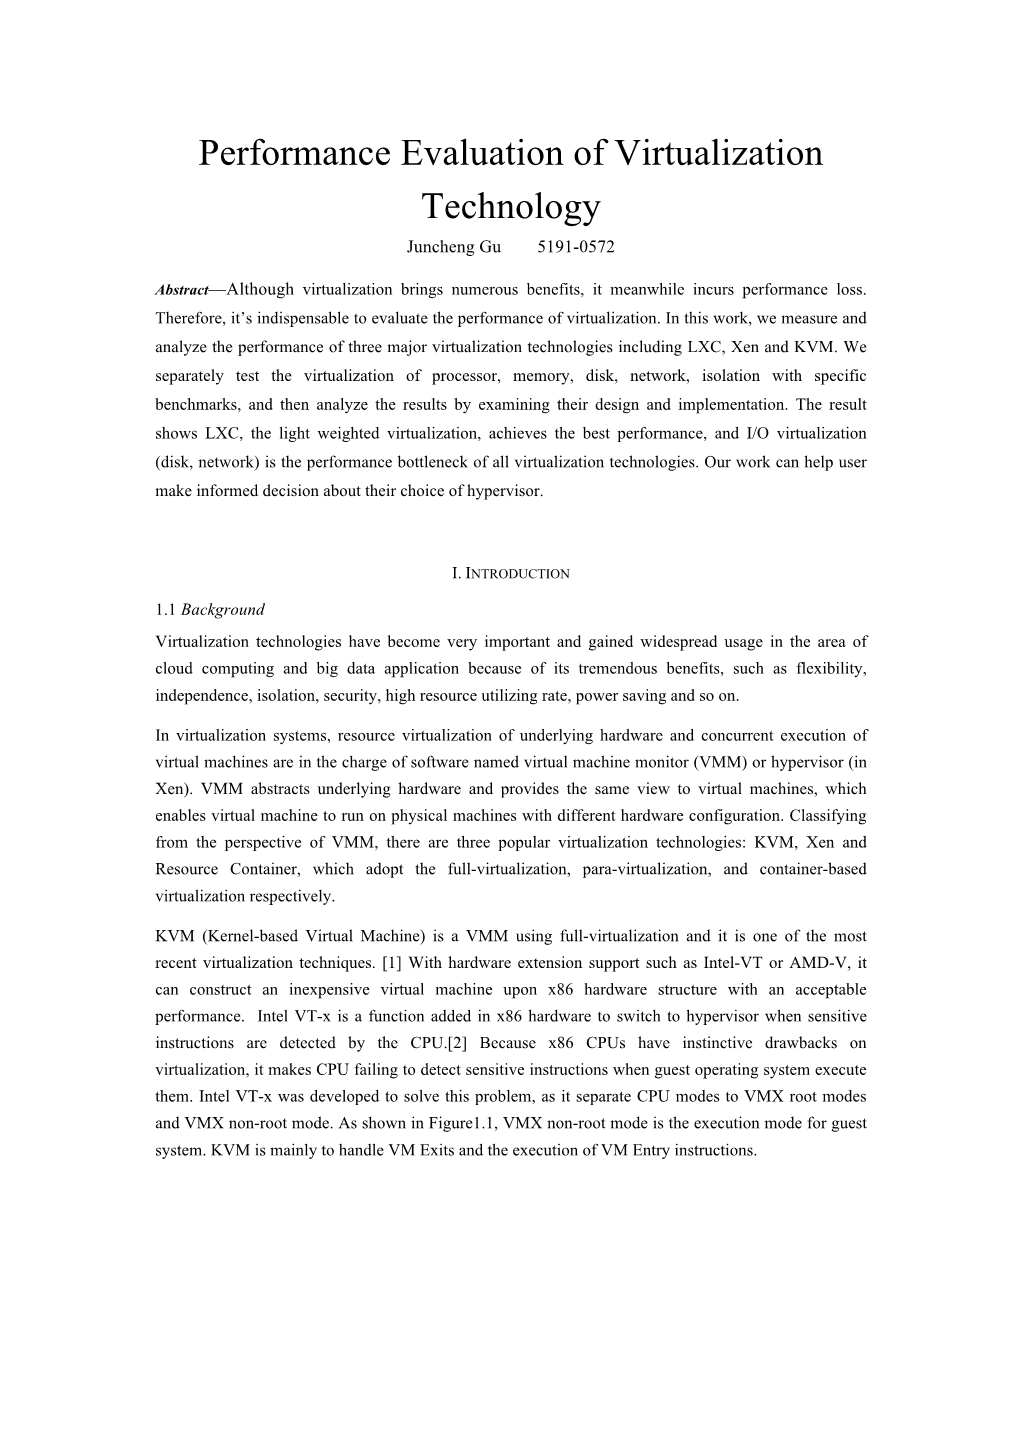 Performance Evaluation of Virtualization Technology Juncheng Gu 5191-0572